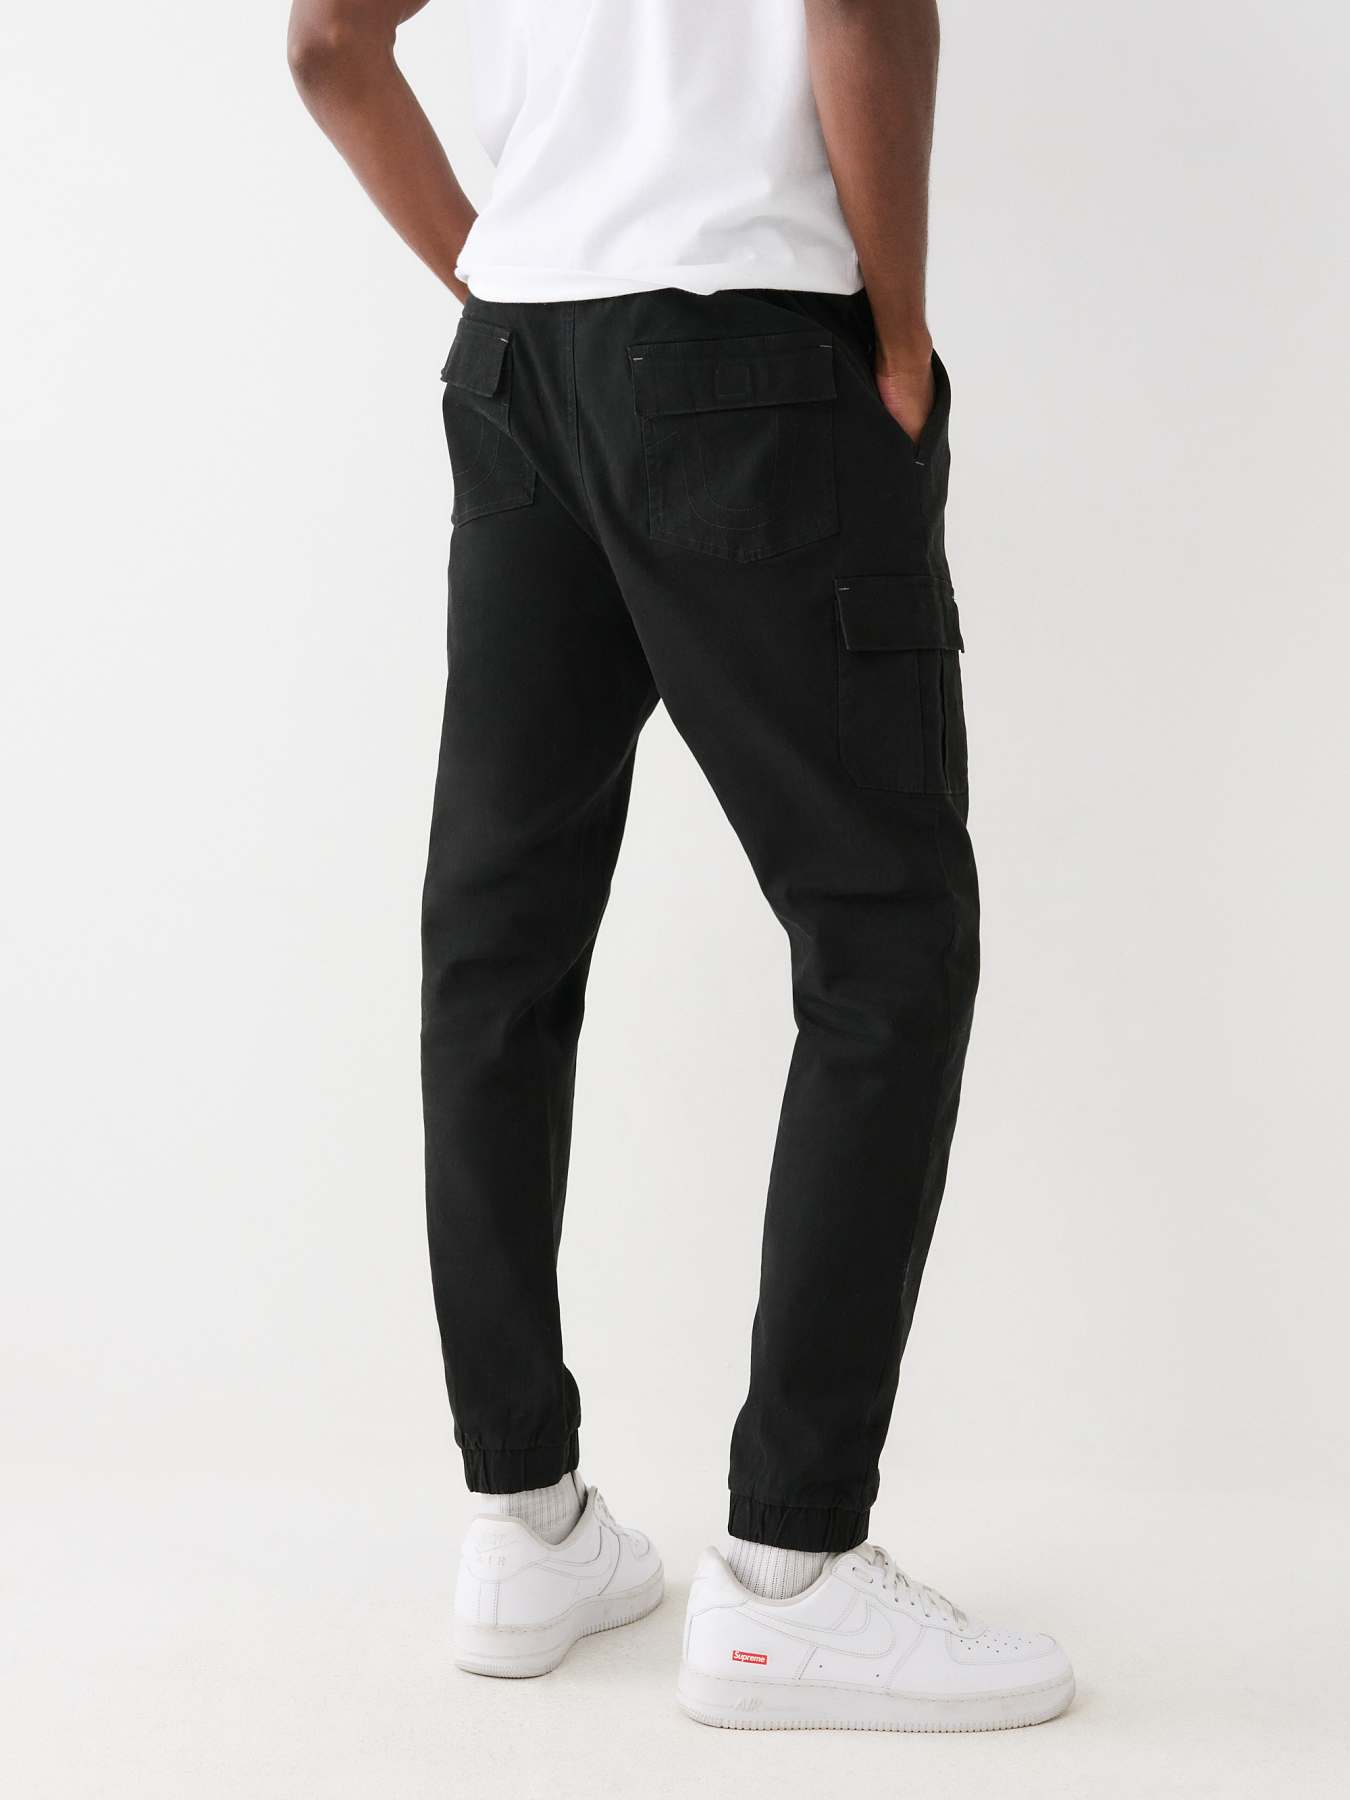 True Religion Contrast Stitch Sweatpants in Black for Men